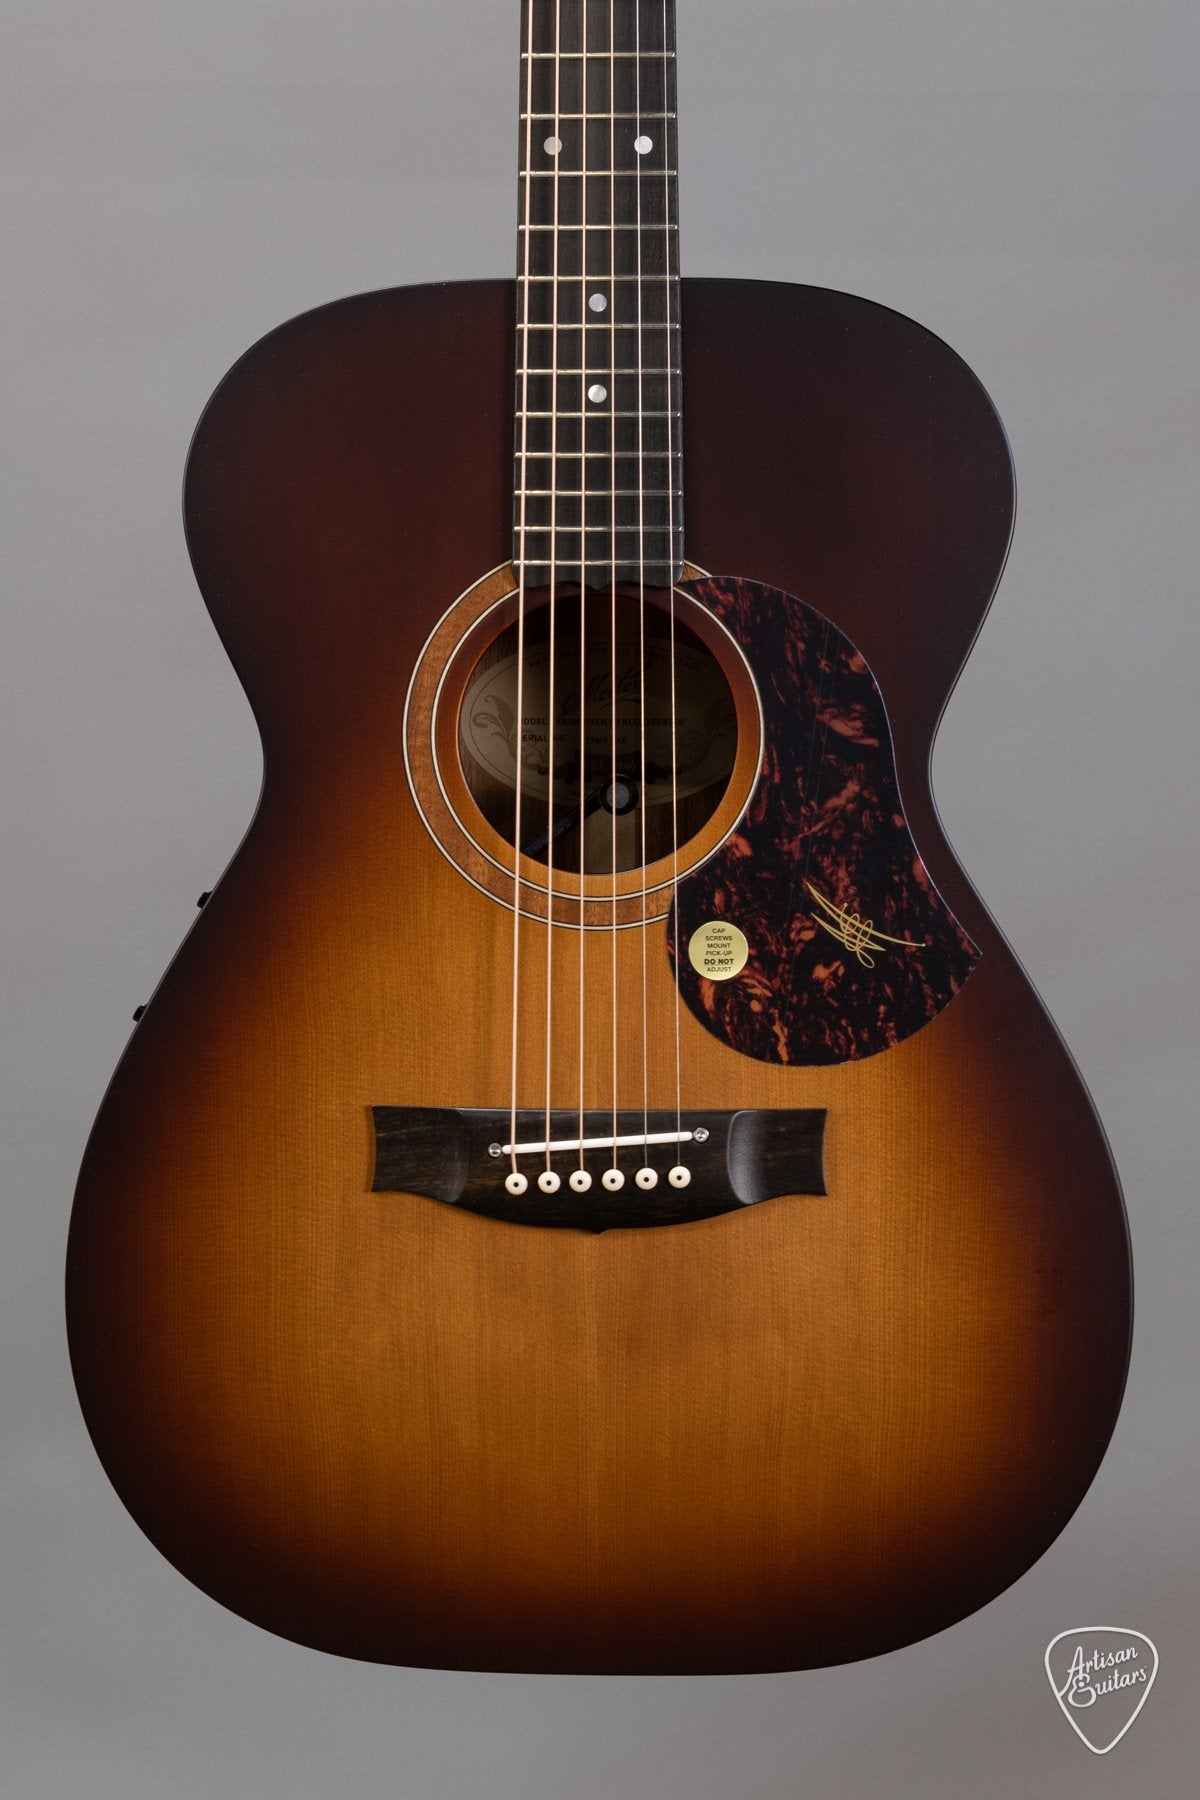 Maton Guitars SRS808 with Tobacco Sunburst Red Cedar Top - ID 15084 - Artisan Guitars